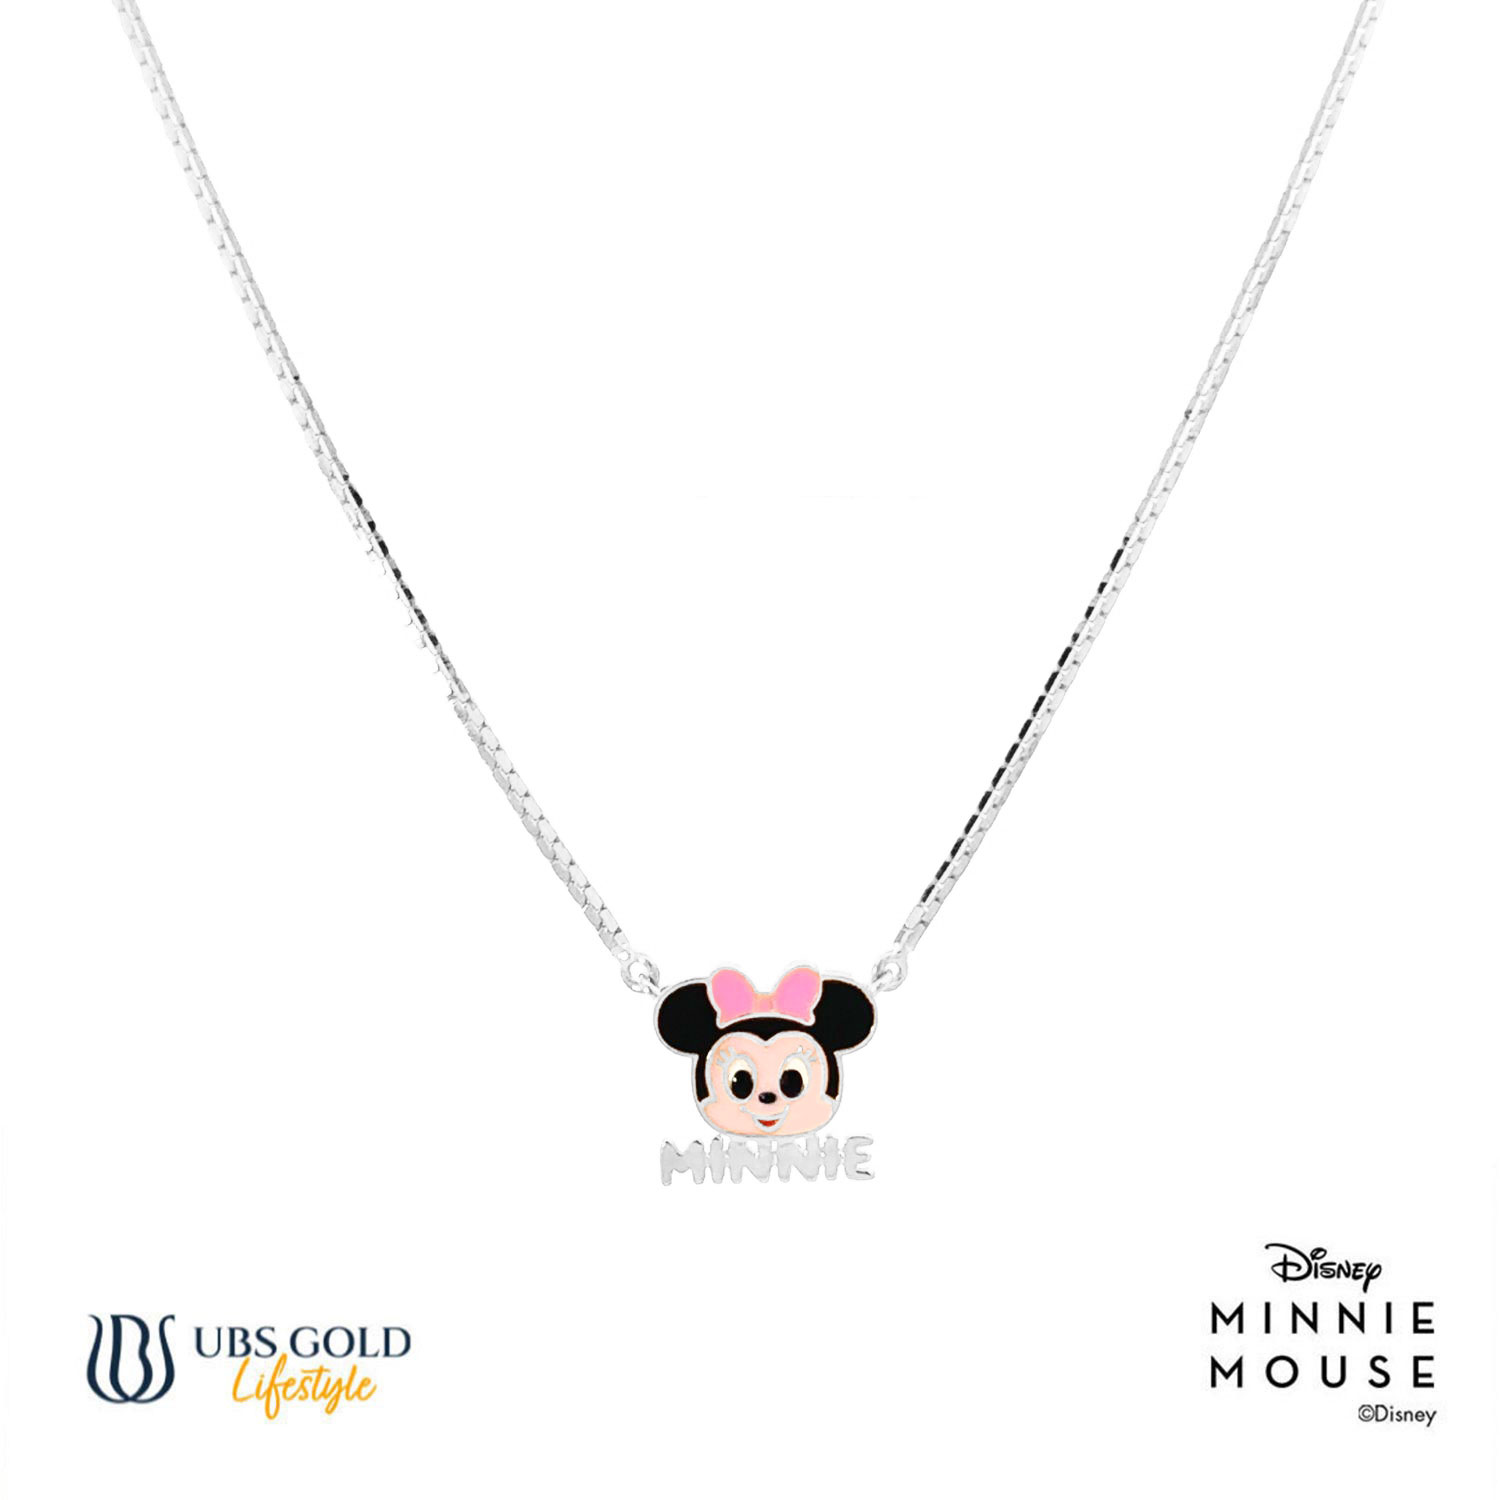 UBS Kalung Emas Anak Disney Minnie Mouse - Kky0444 - 17K